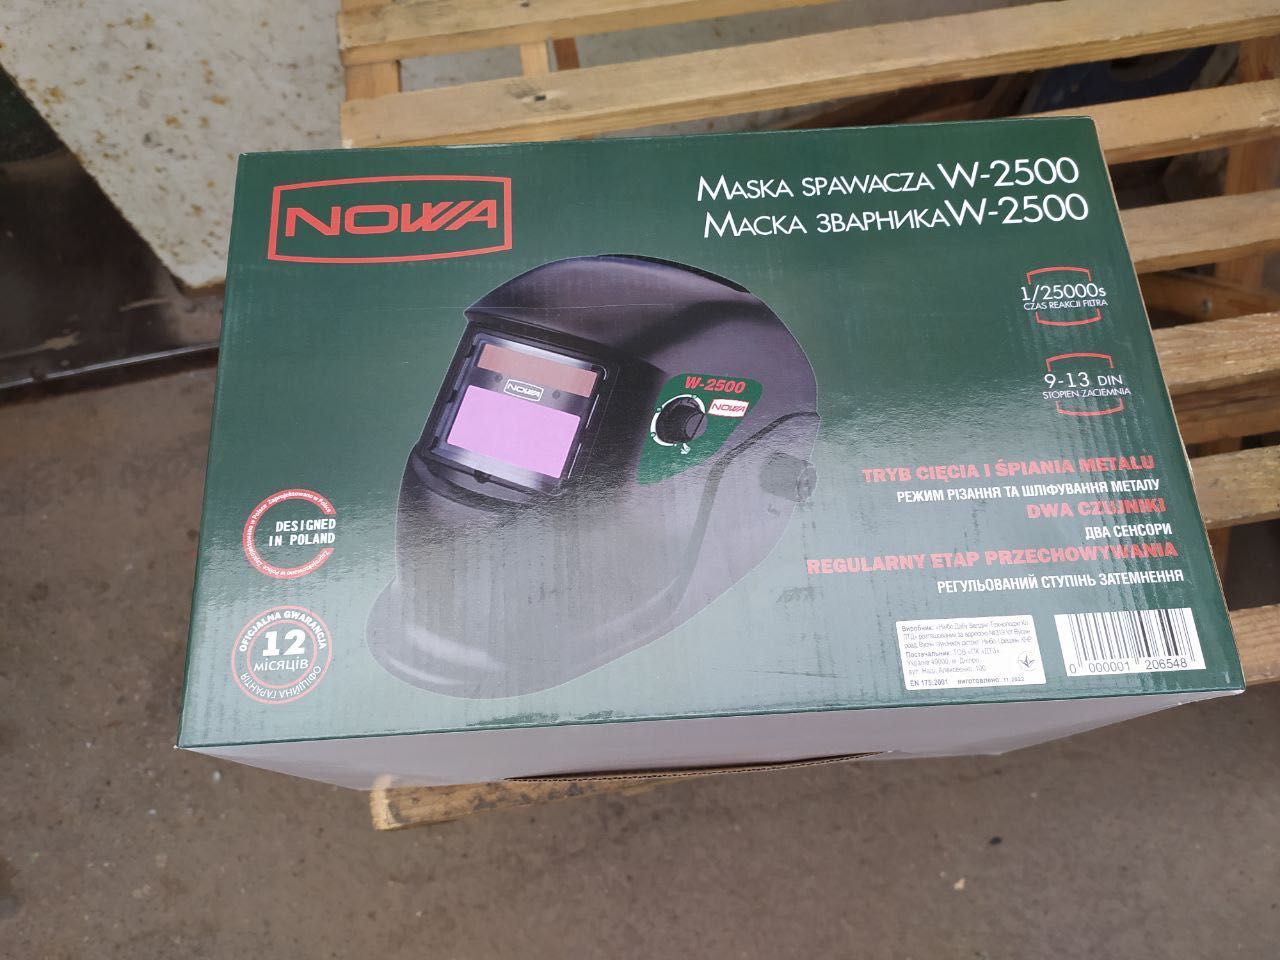 Сварочный аппарат "Nowa"W355K и маска сварщика "Nowa"W-2500